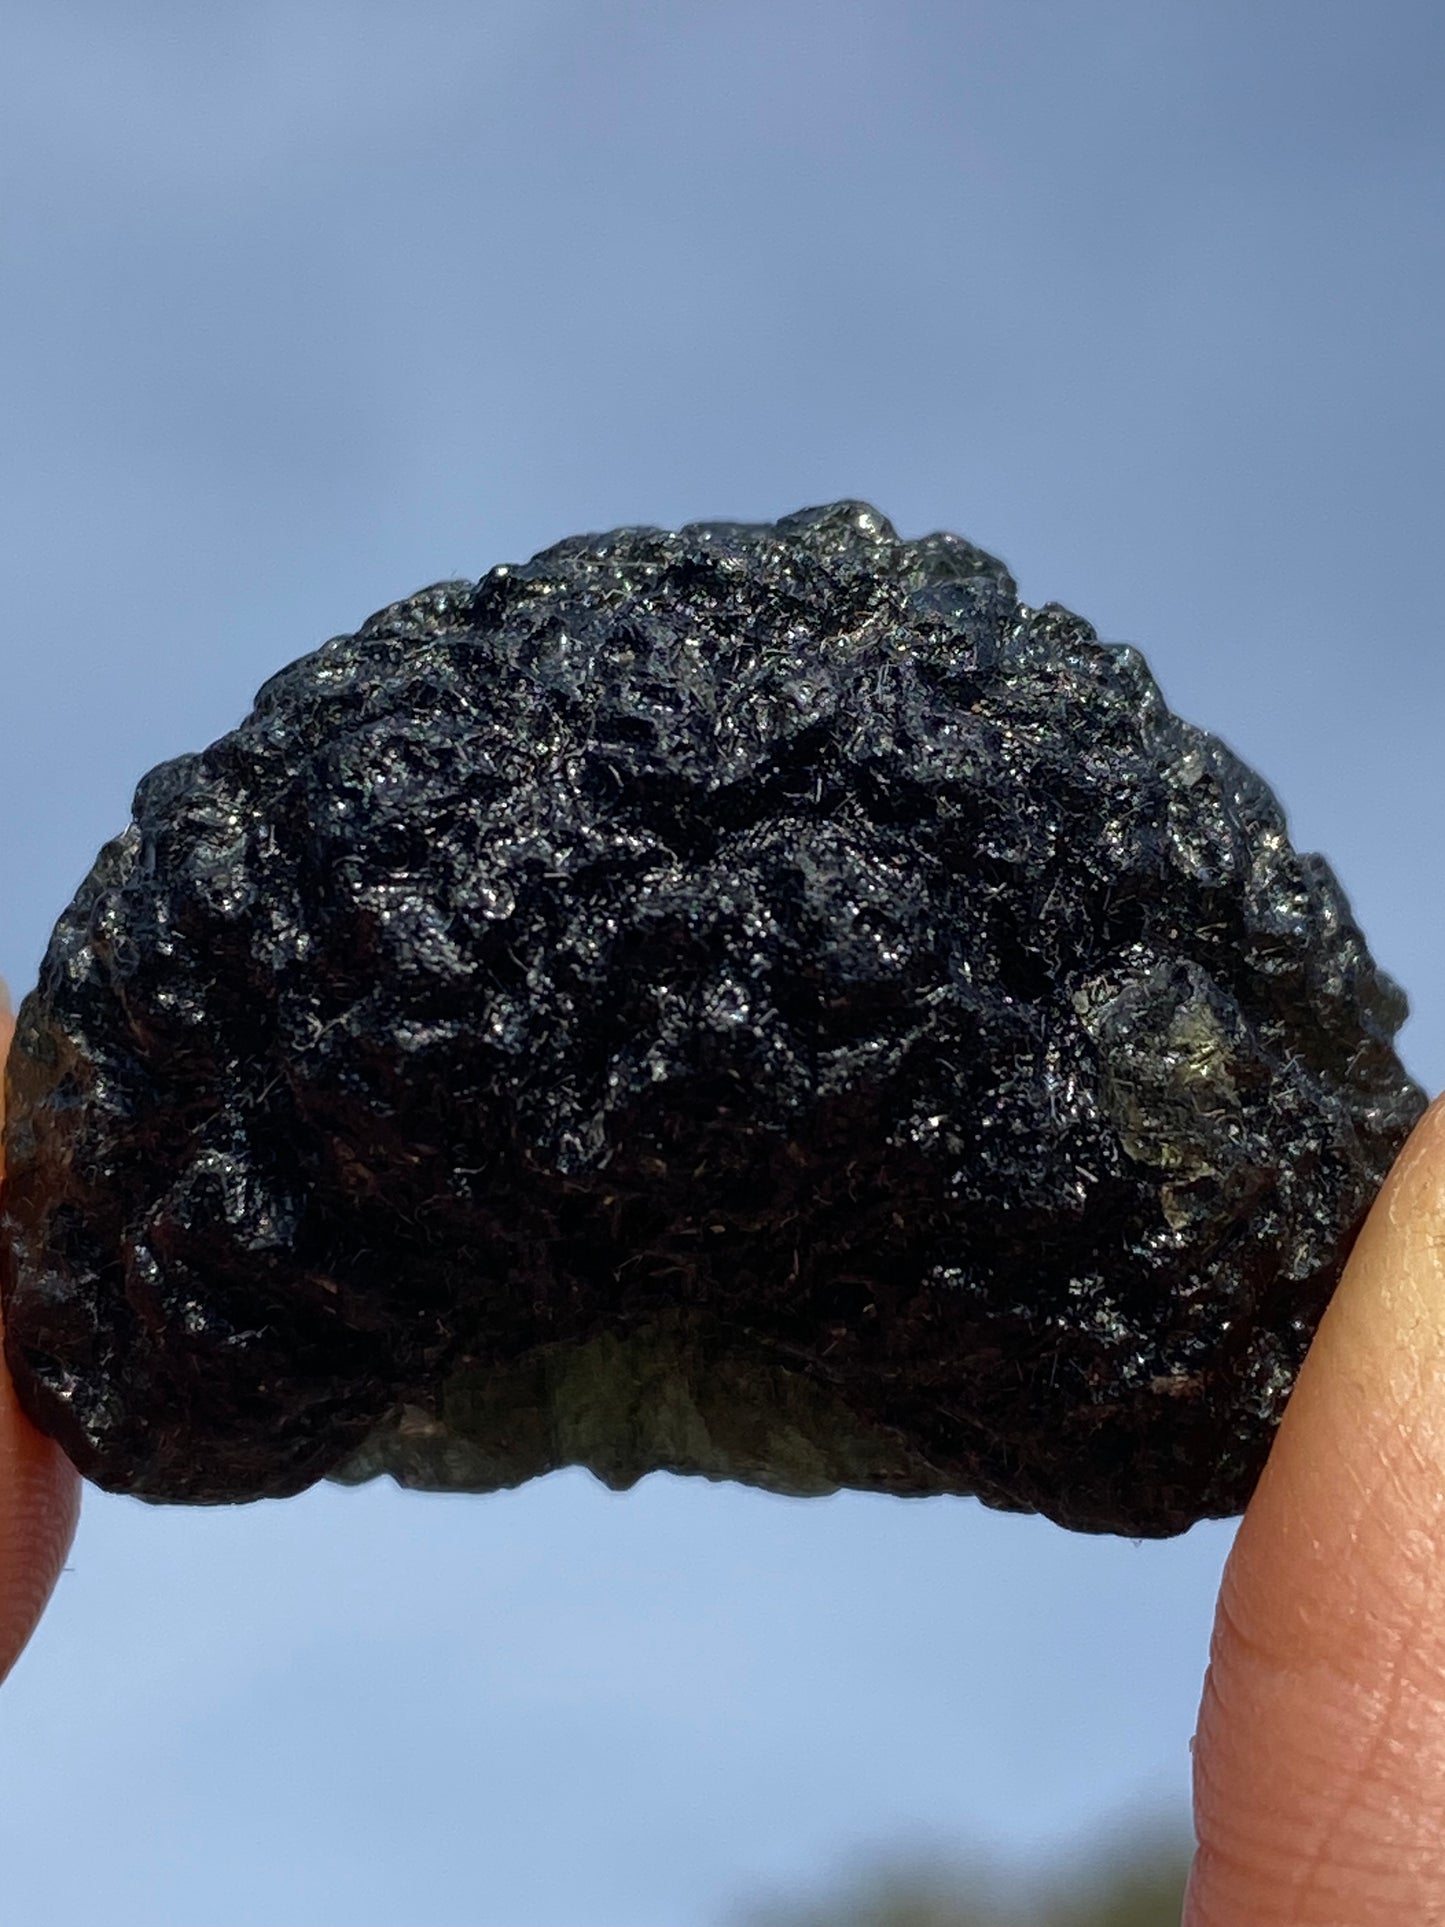 Chlum Moldavite 13.5 grams